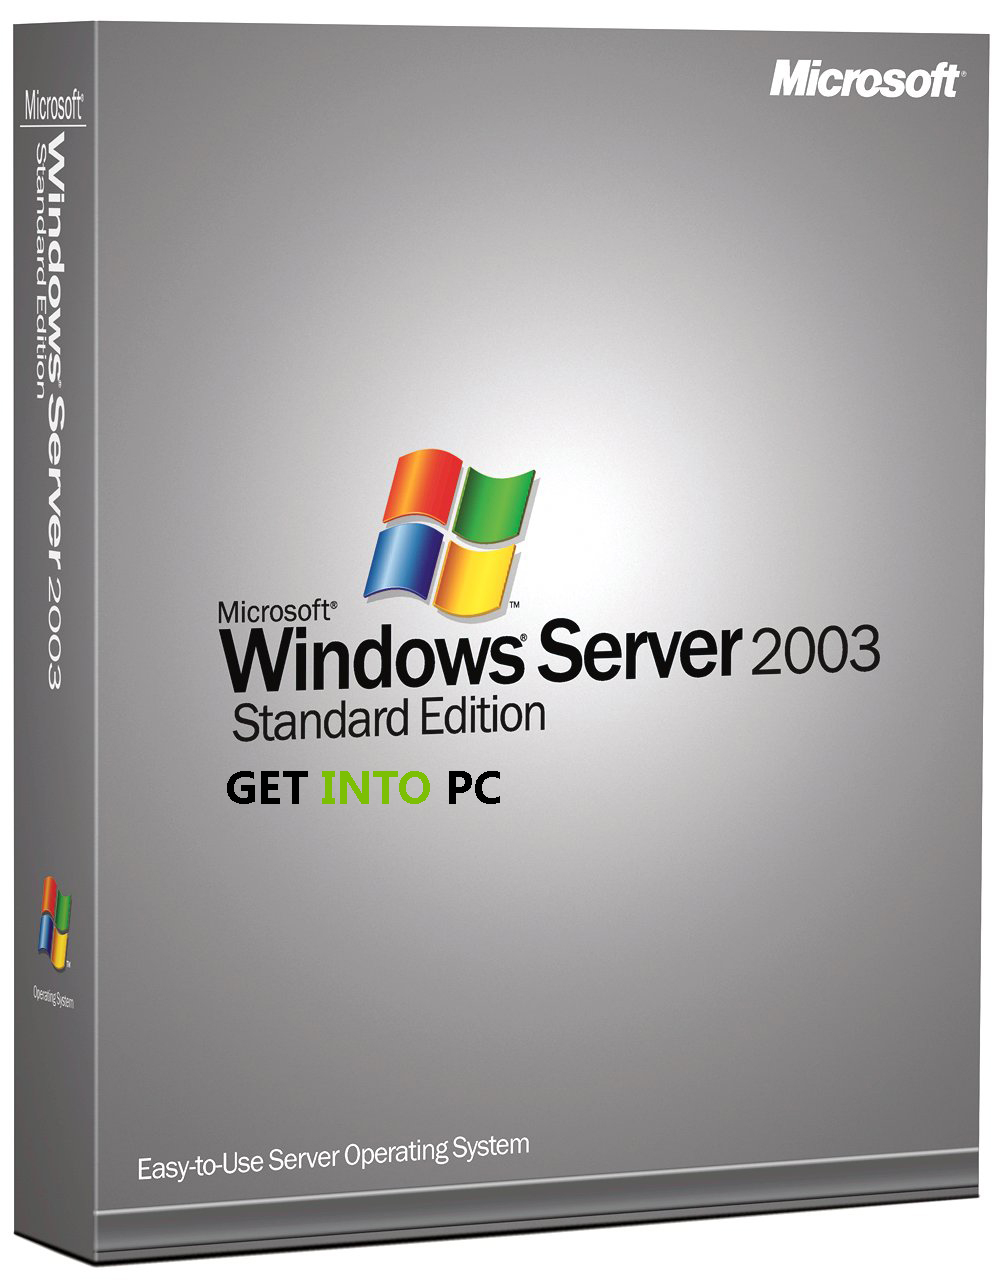 Windows server 2003 download iso image